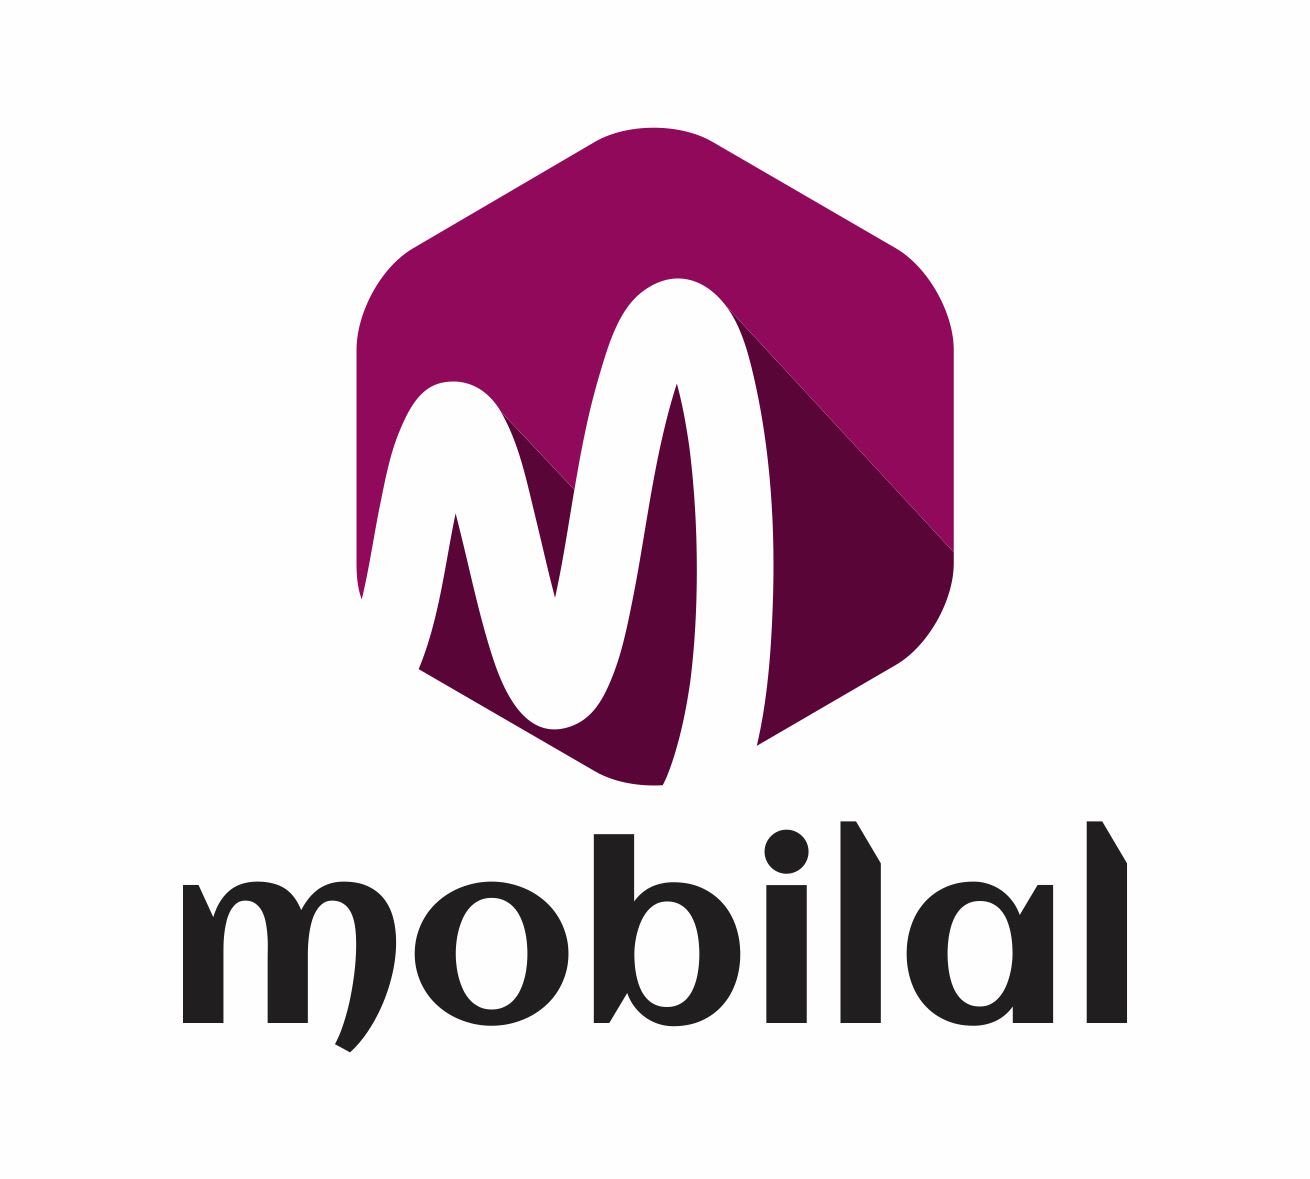 Mobilal